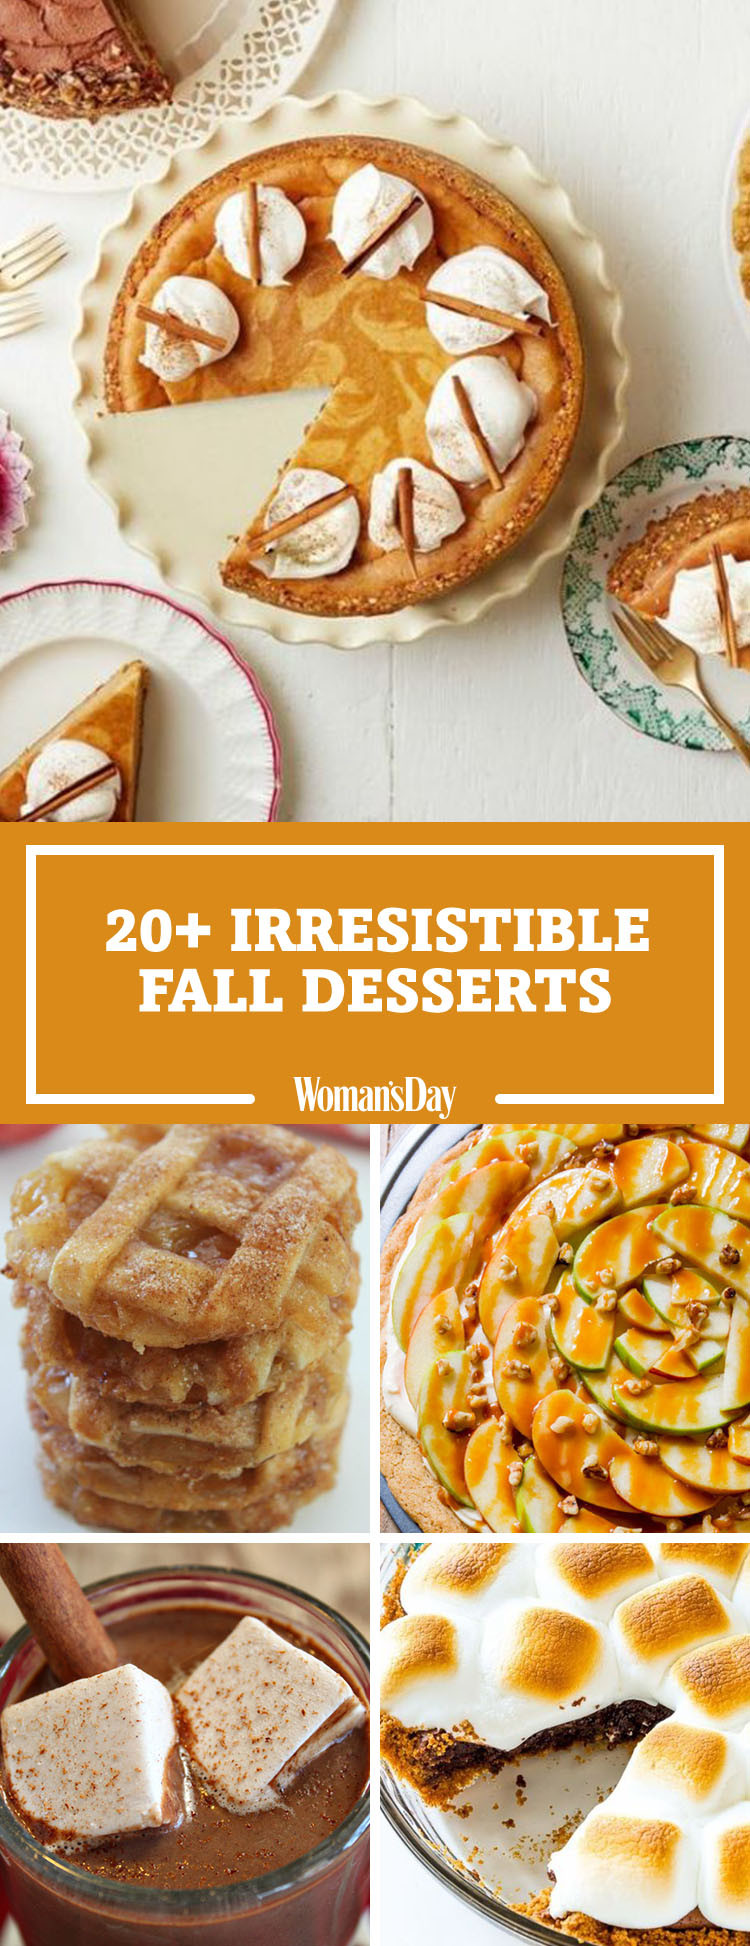 Fall Desserts Pinterest
 31 Easy Fall Desserts Best Recipes for Autumn Desserts